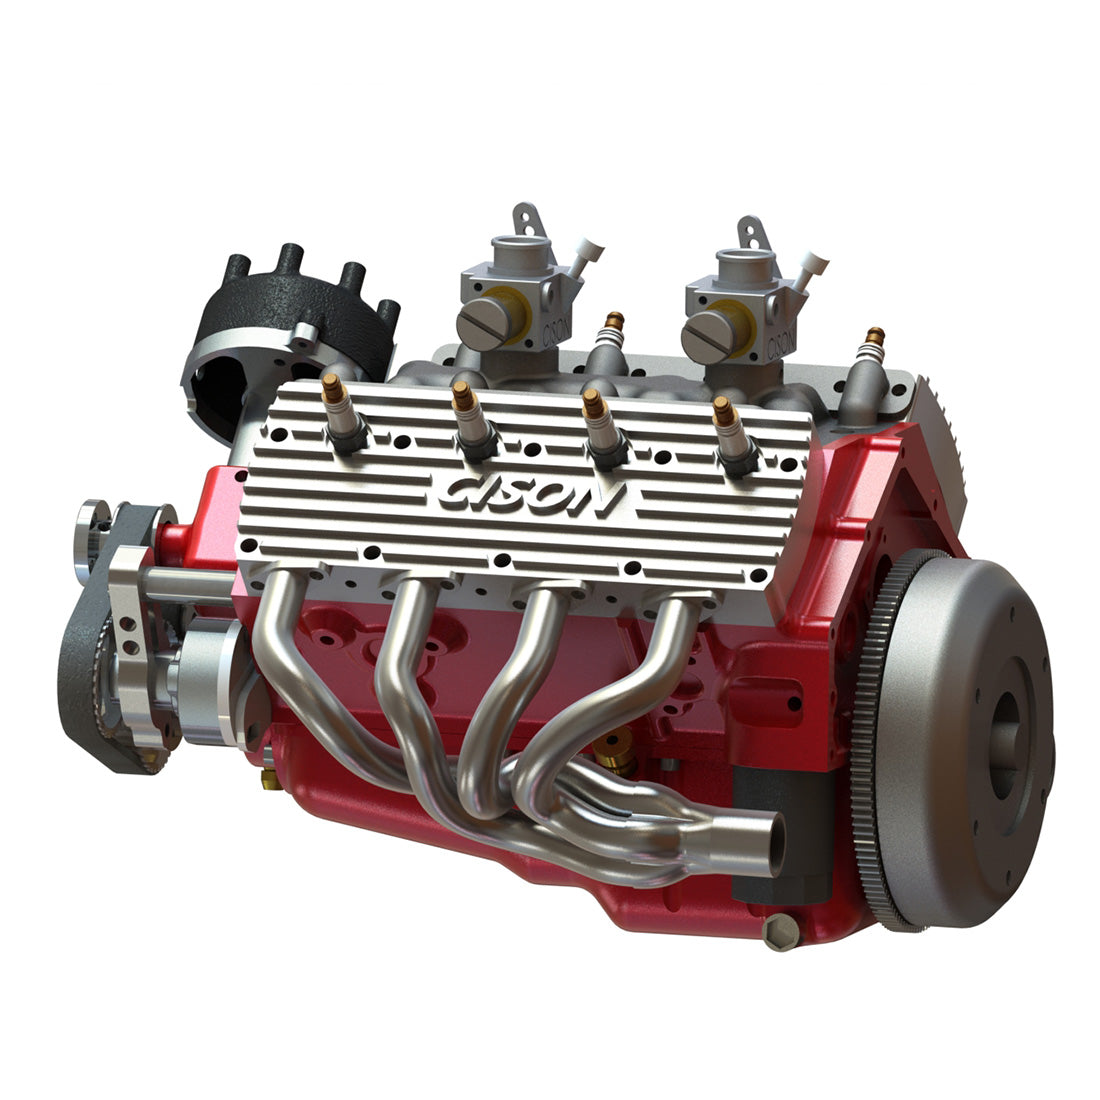 Cison Flathead V8 Engine Kits with Metal Base Full Set V8-440 44cc - stirlingkit